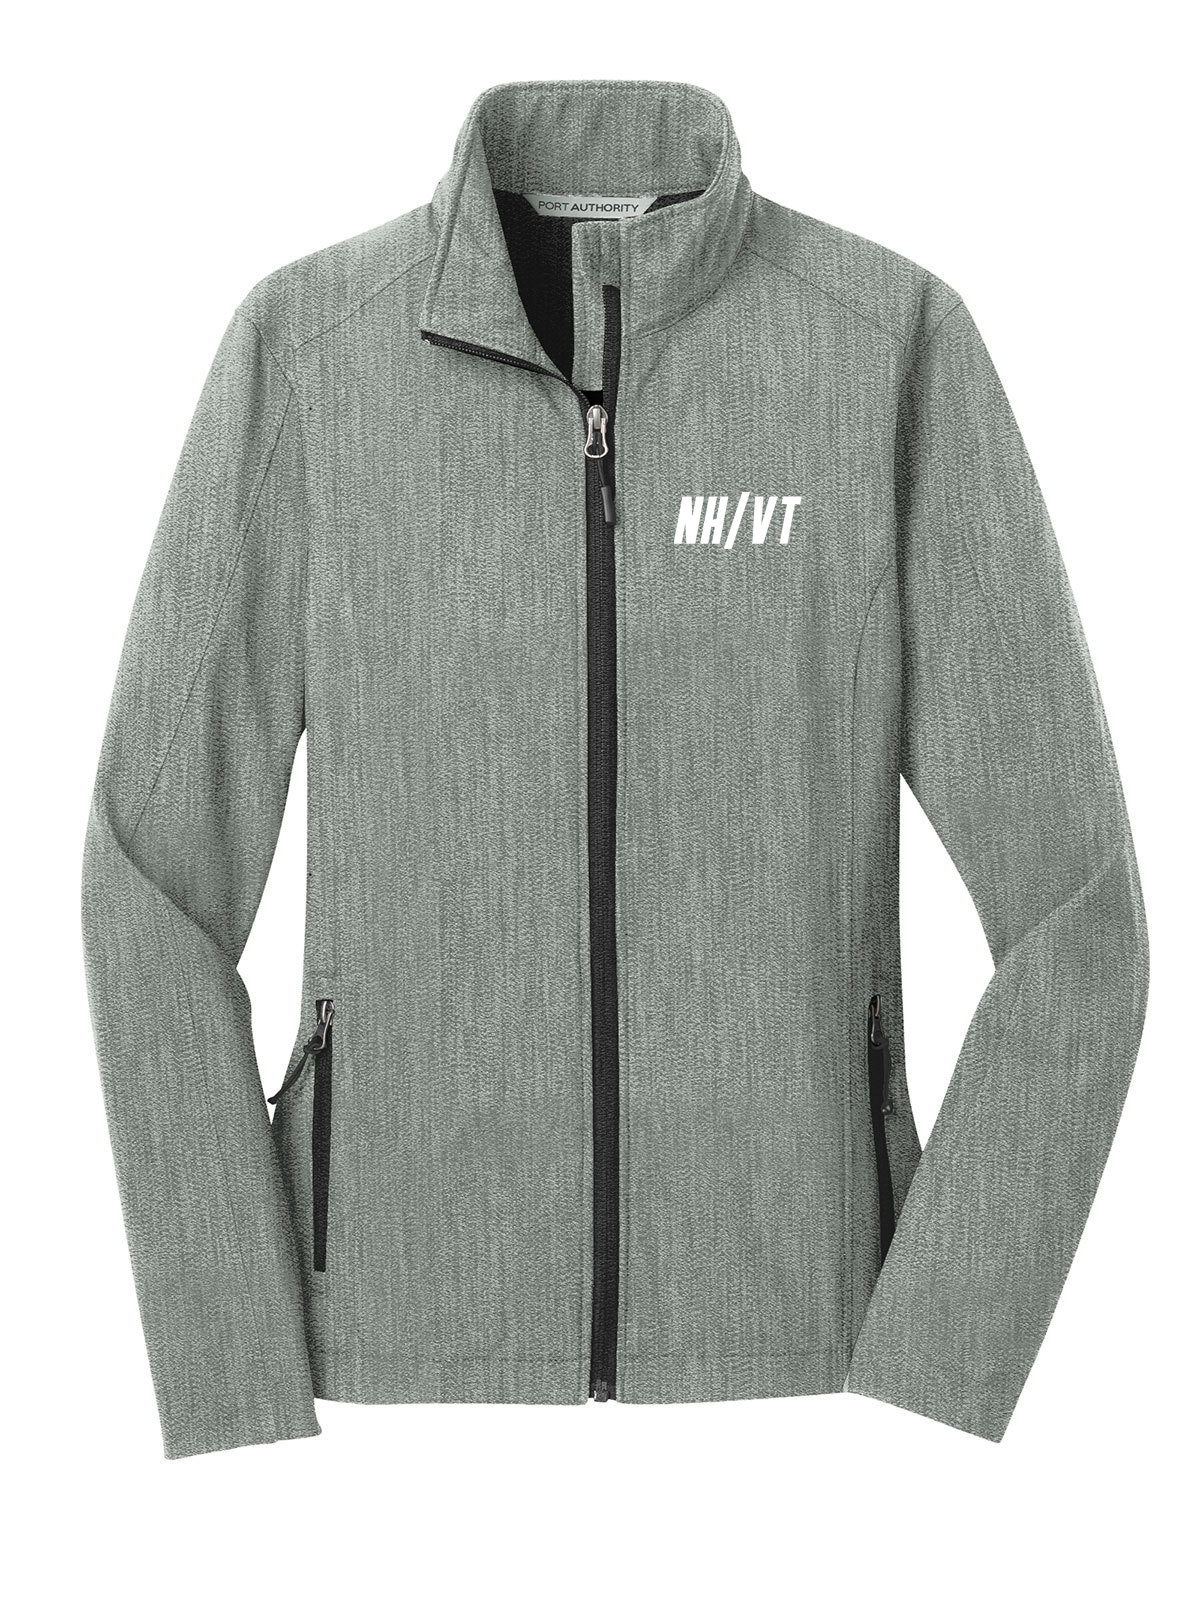 NH/VT Lacrosse Women's Soft Shell Jacket